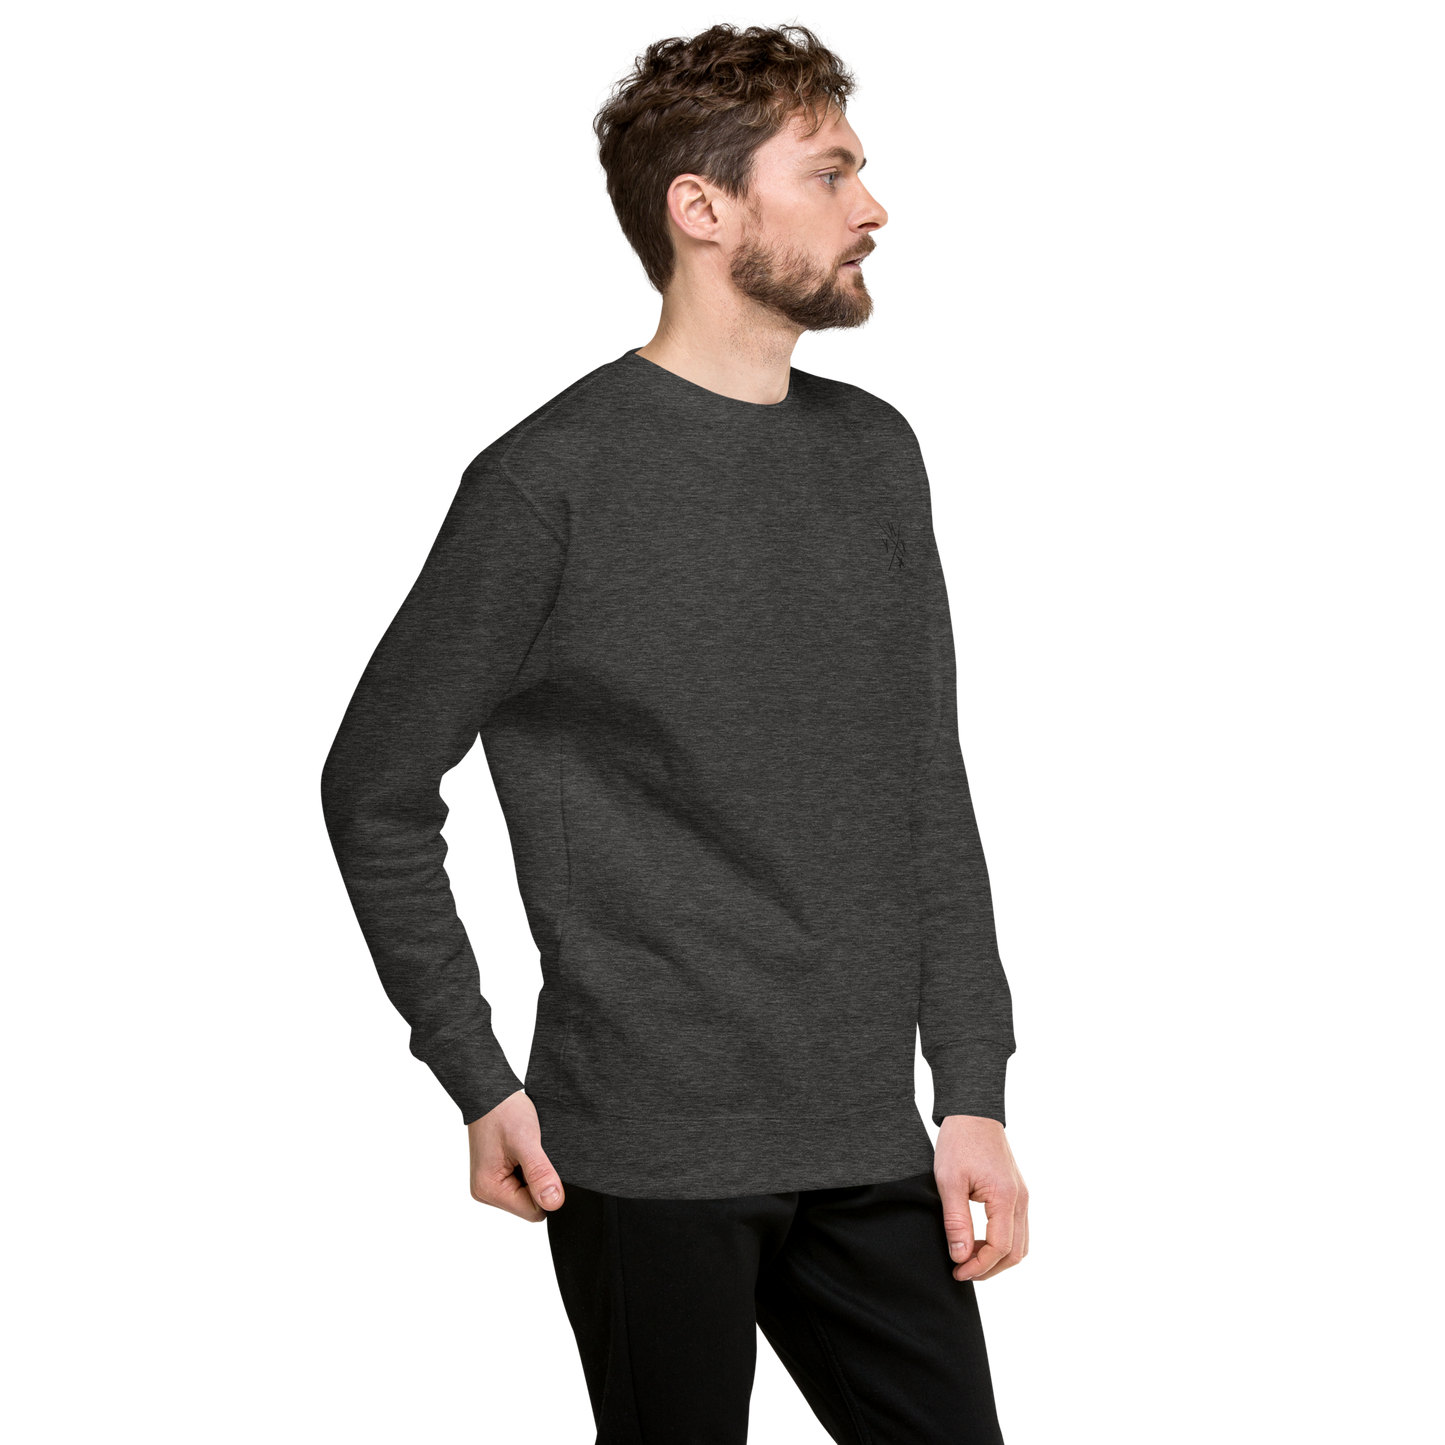 Crossed-X Premium Unisex Sweatshirt • Black Embroidery